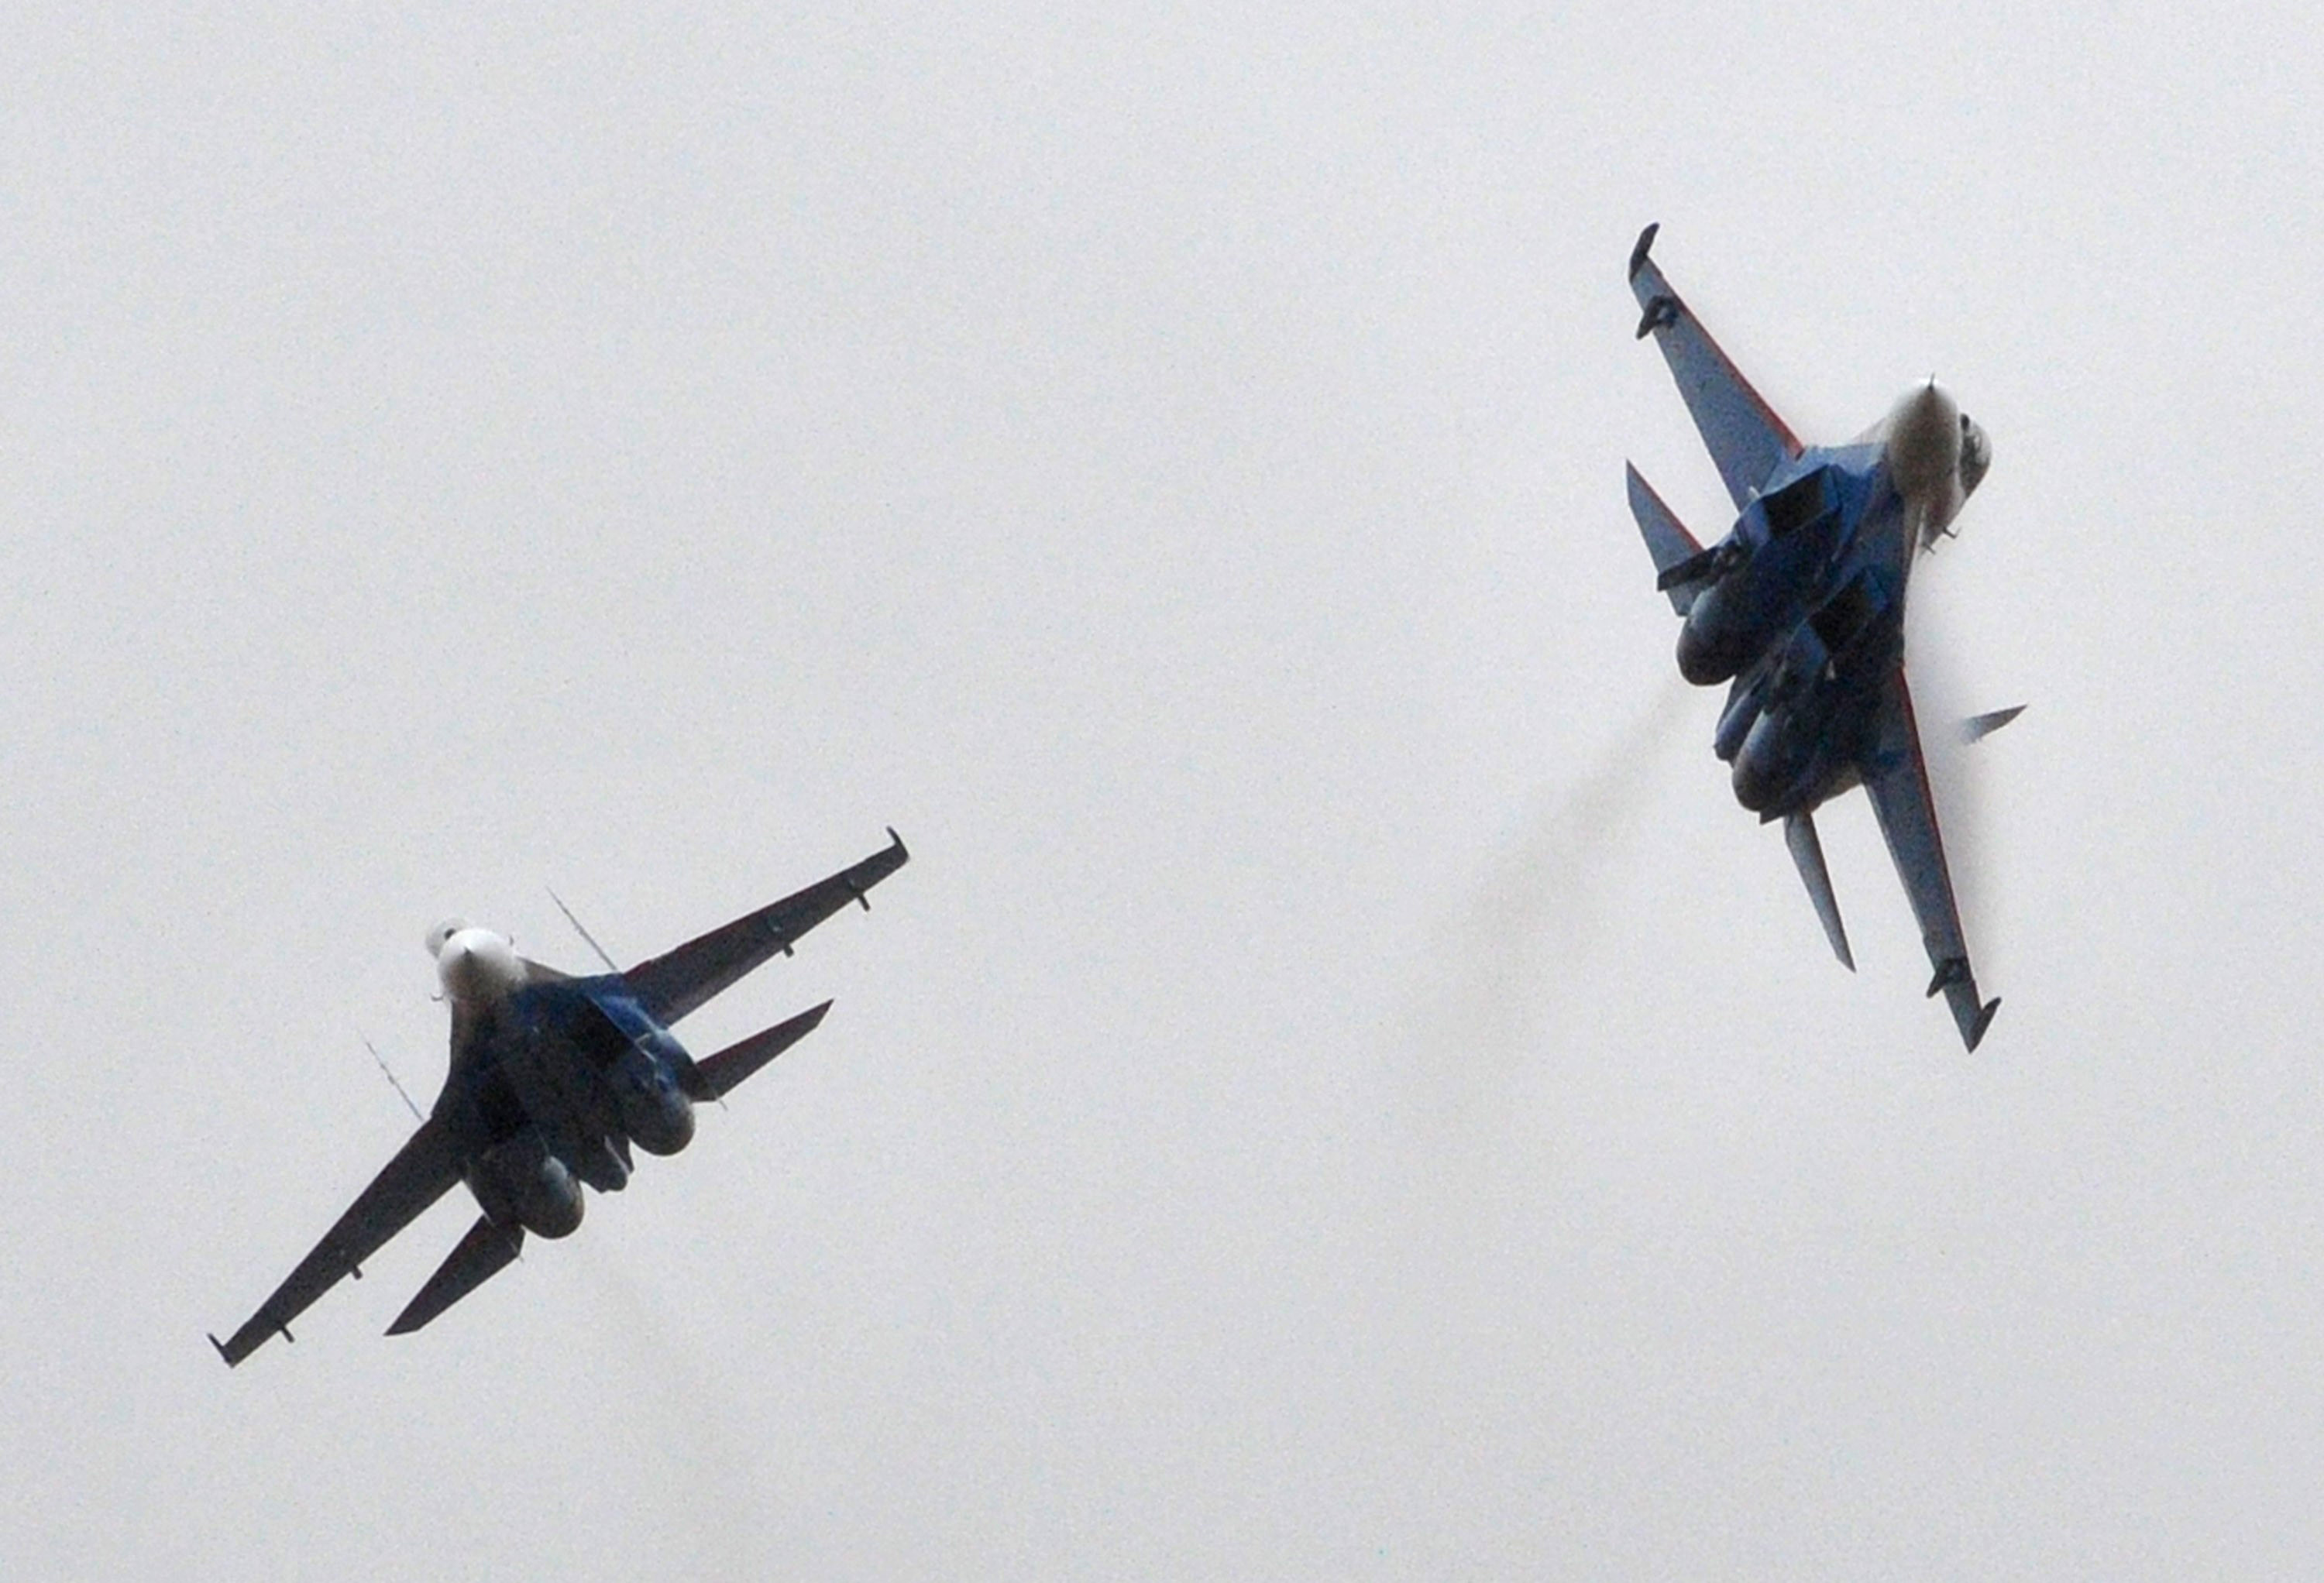 Russia: U.S. spy plane swerved dangerously near Su-27 jet over Baltic